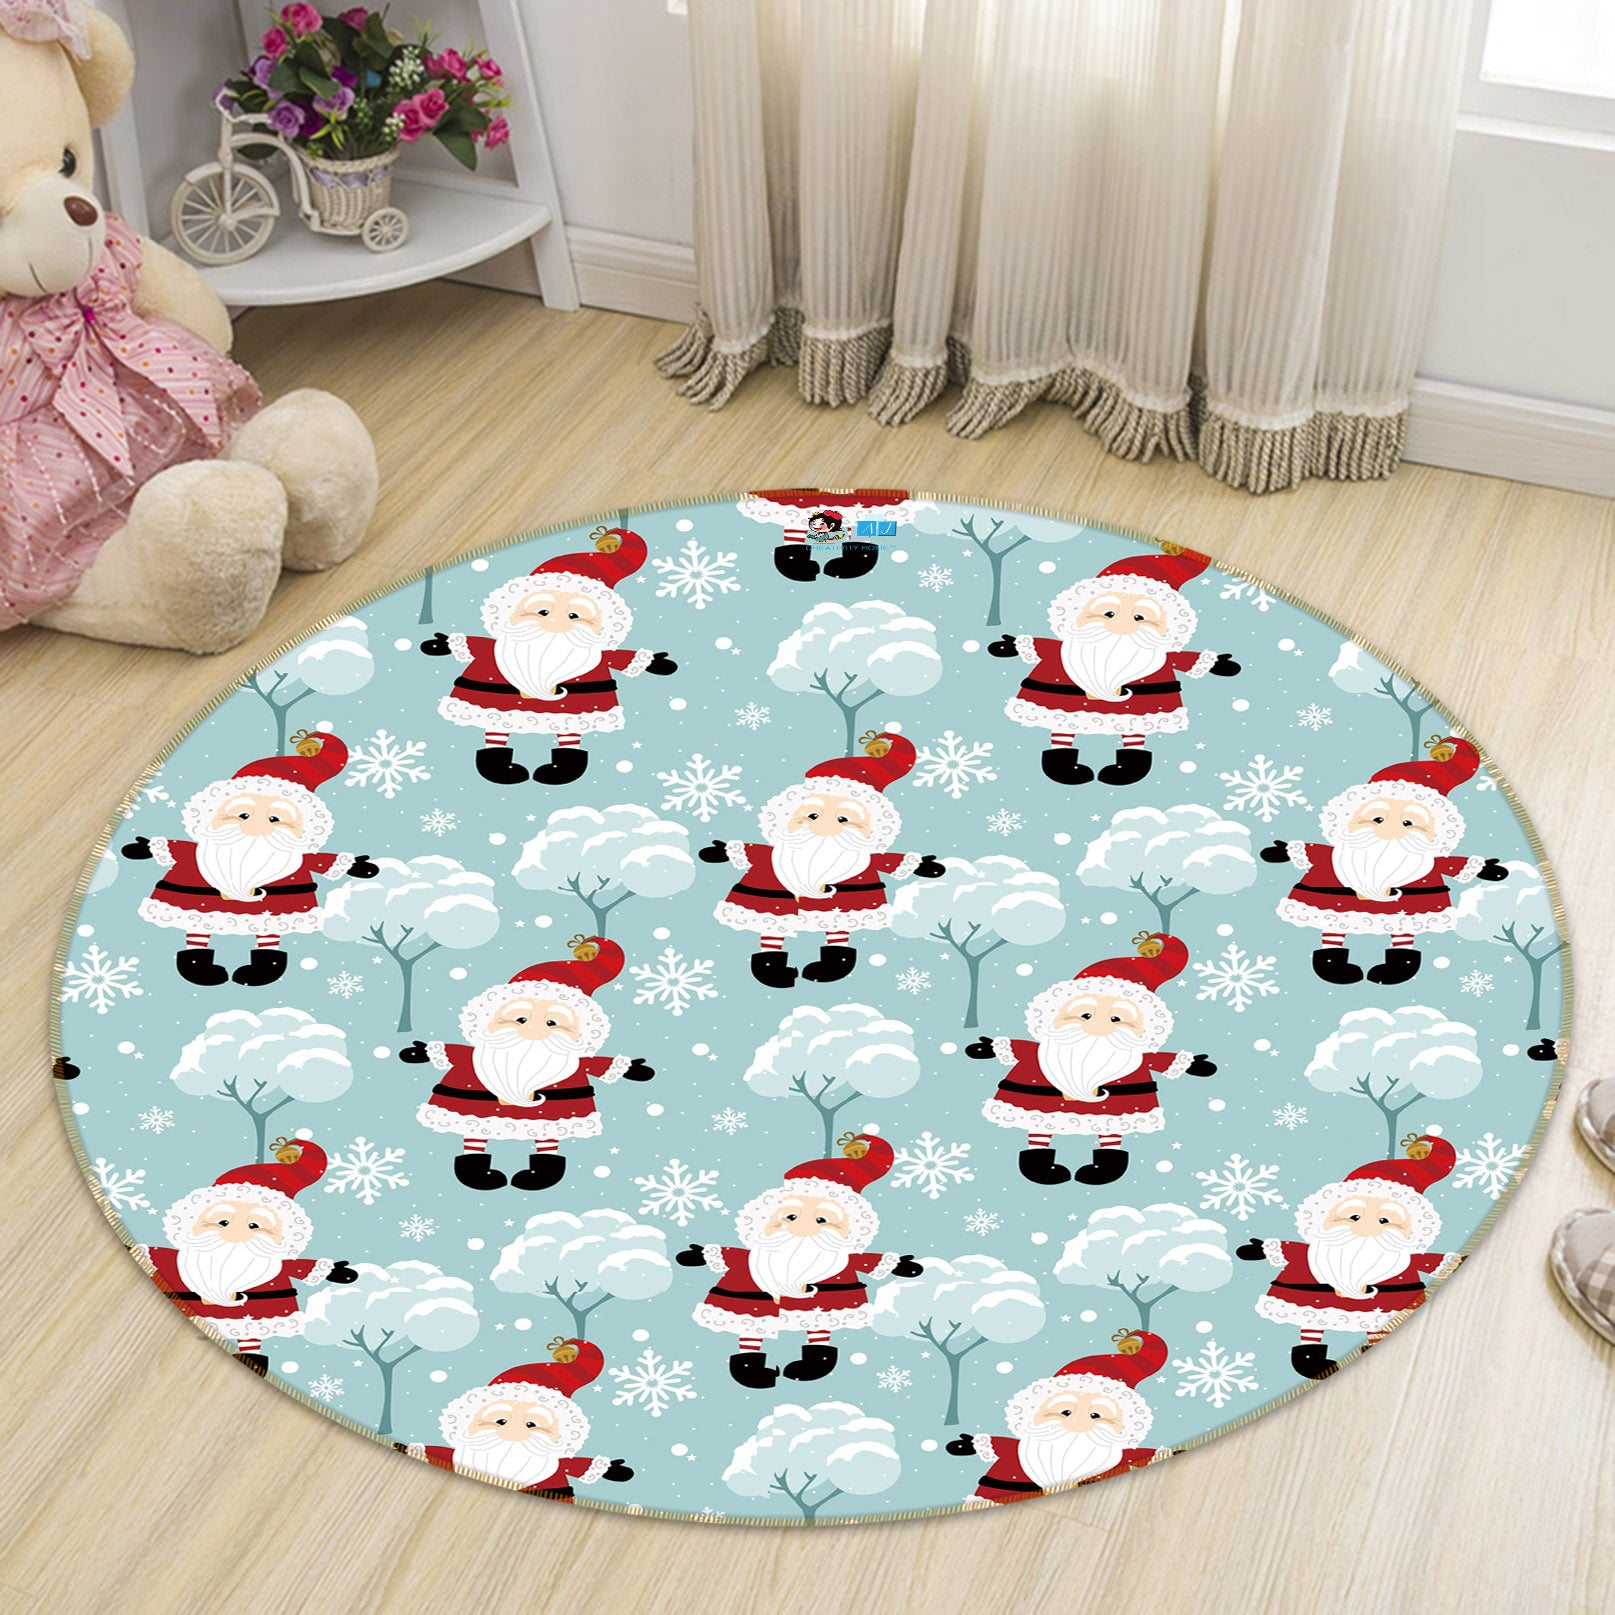 3D Santa Claus Pattern 56057 Christmas Round Non Slip Rug Mat Xmas